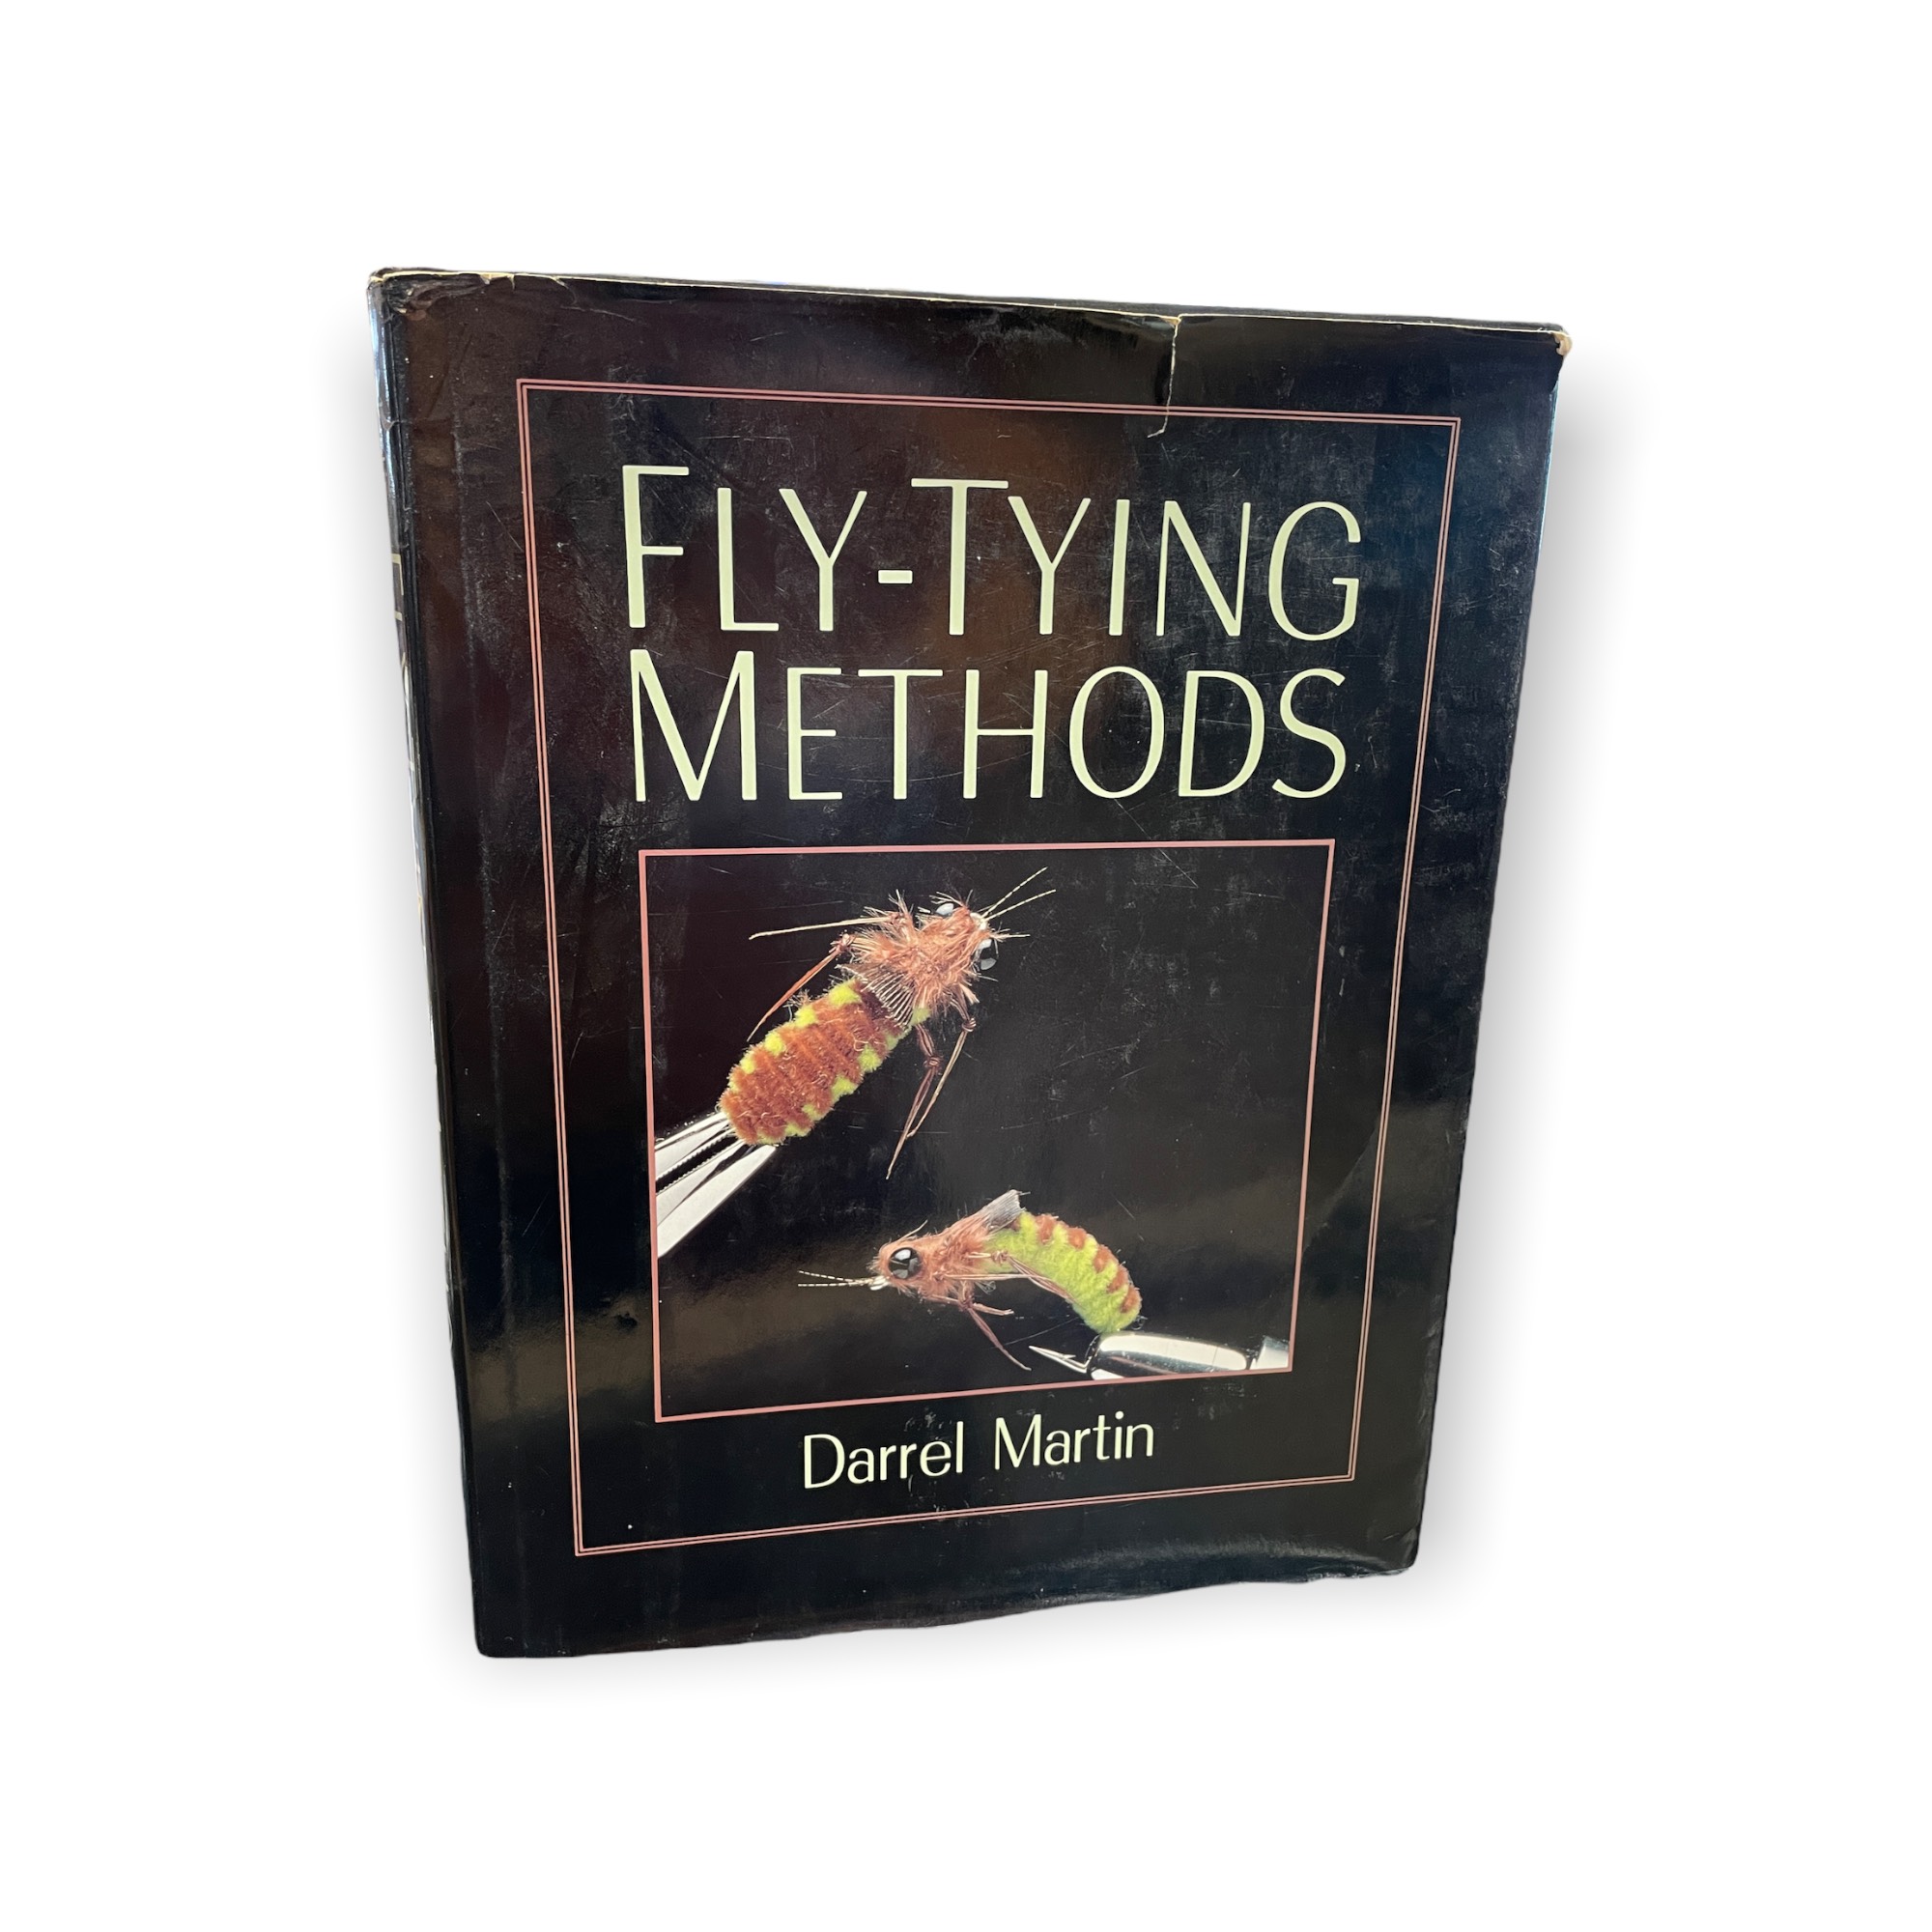 Fly Tying Methods by Darrel Martin